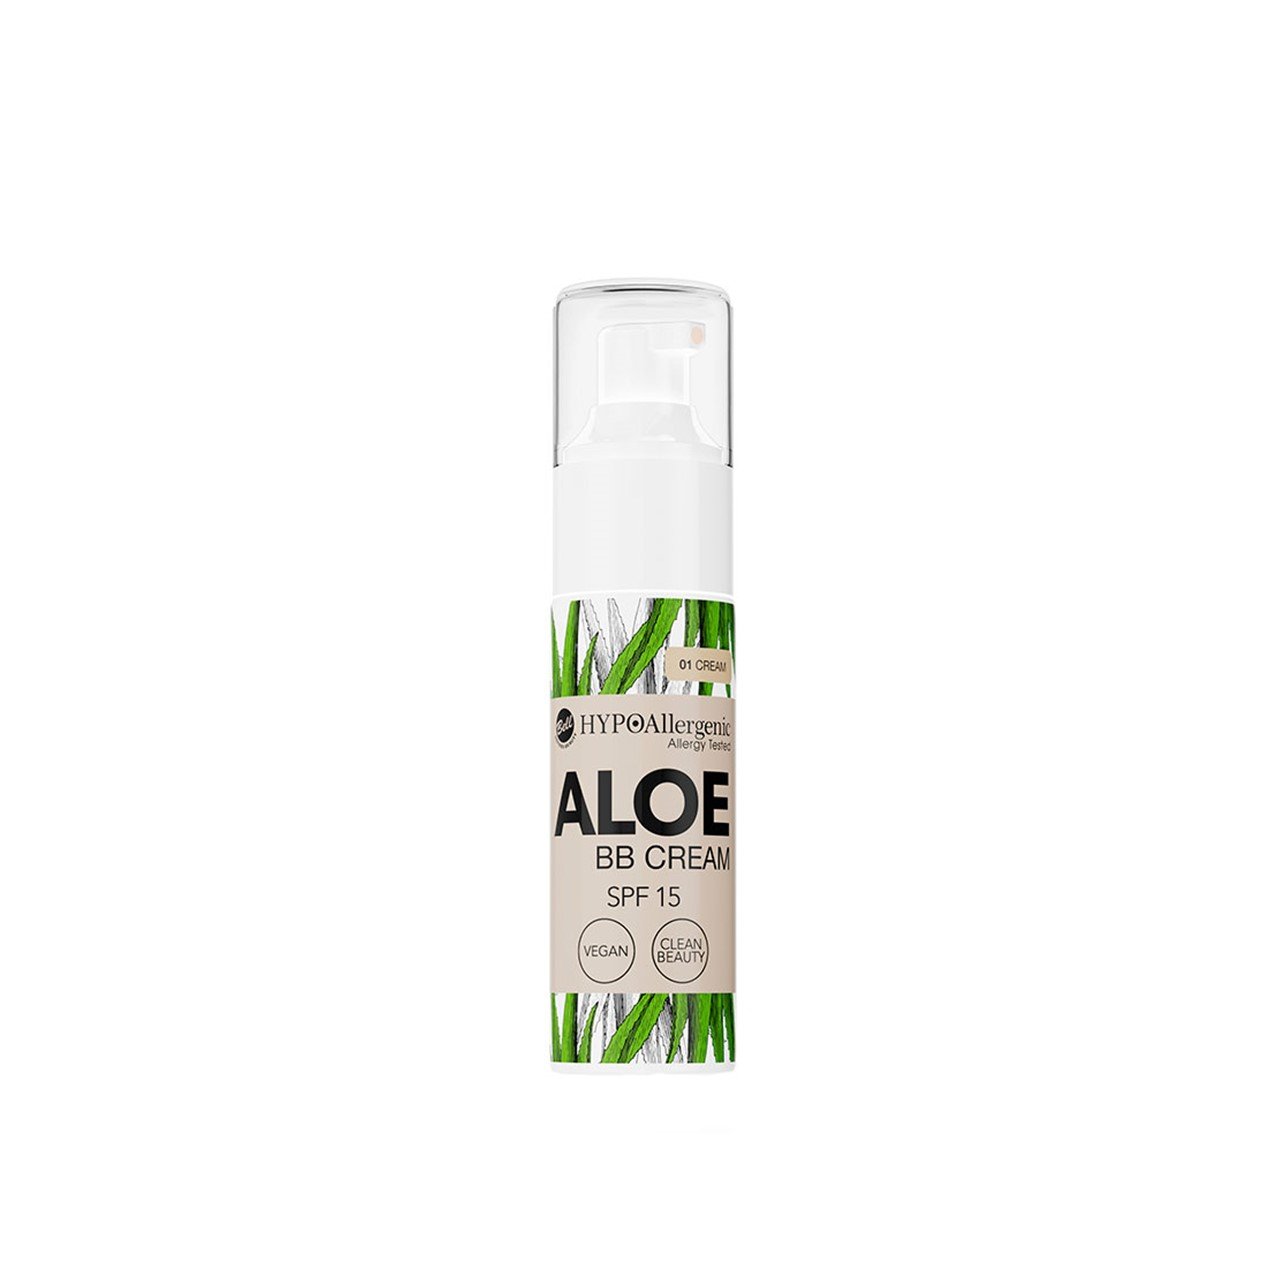 Bell HYPOAllergenic Aloe BB Cream SPF15 01 Cream 20g (0.71oz)